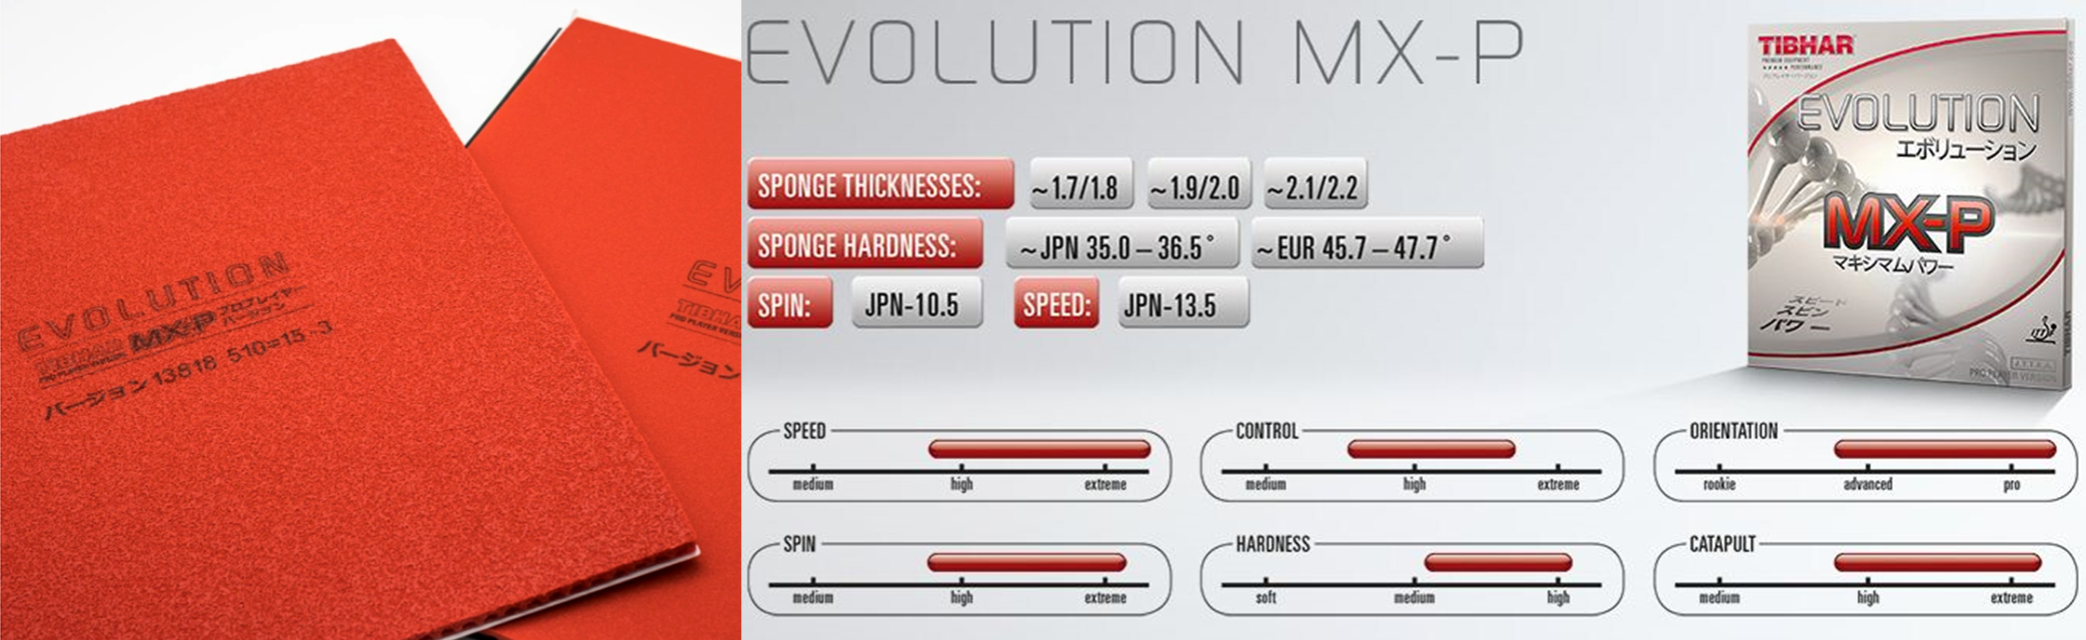 Tibhar Evolution mxp.png